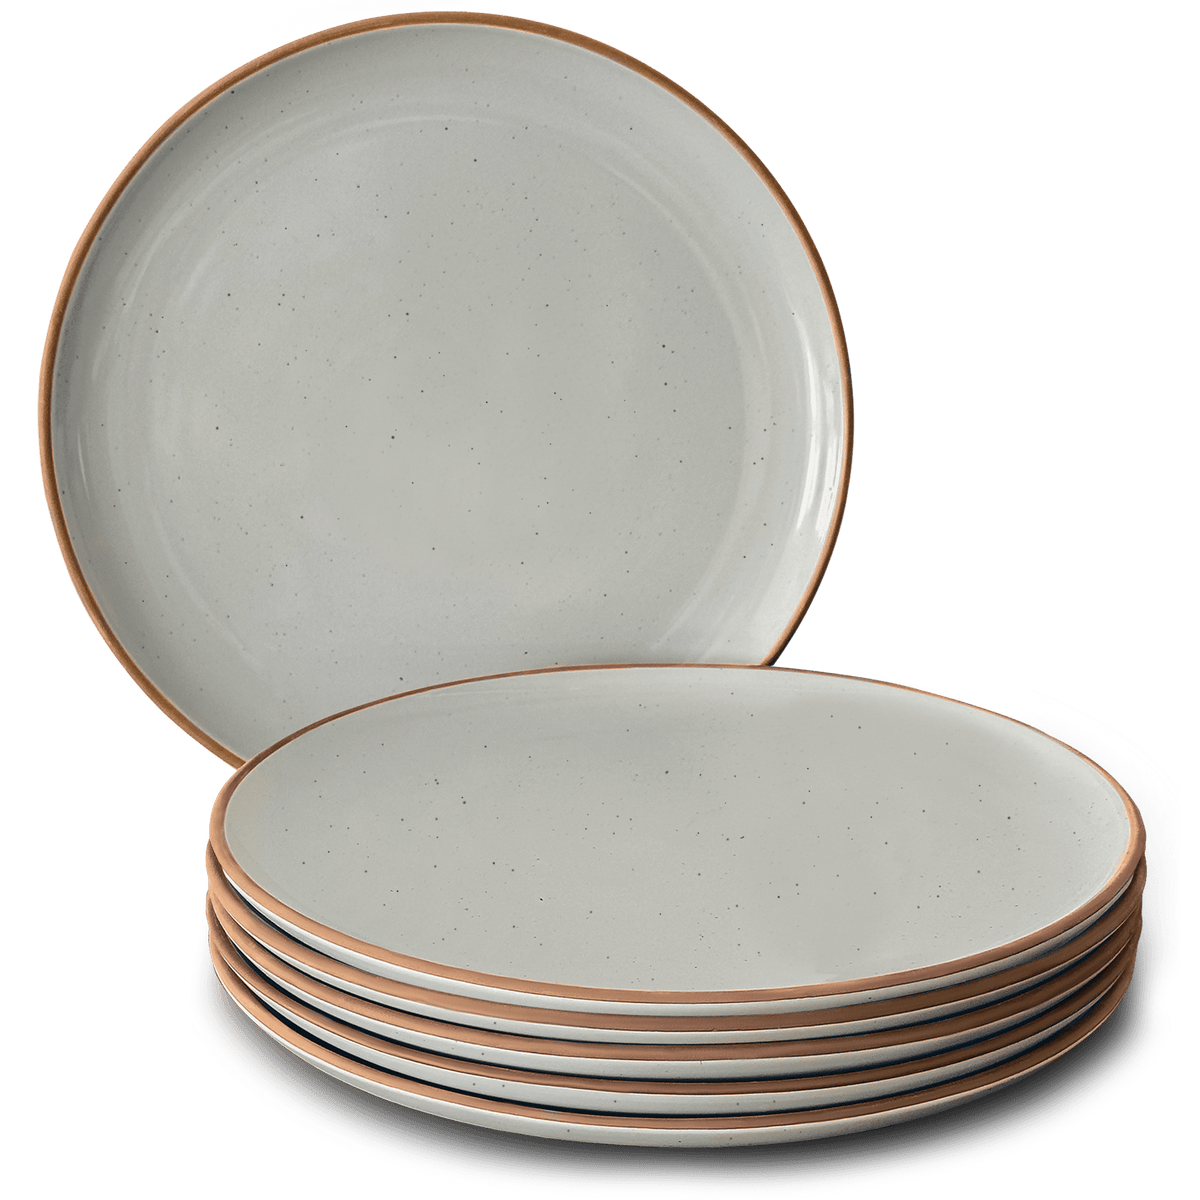 Mora Ceramic Baking Dish with Handles - Dash of Sanity